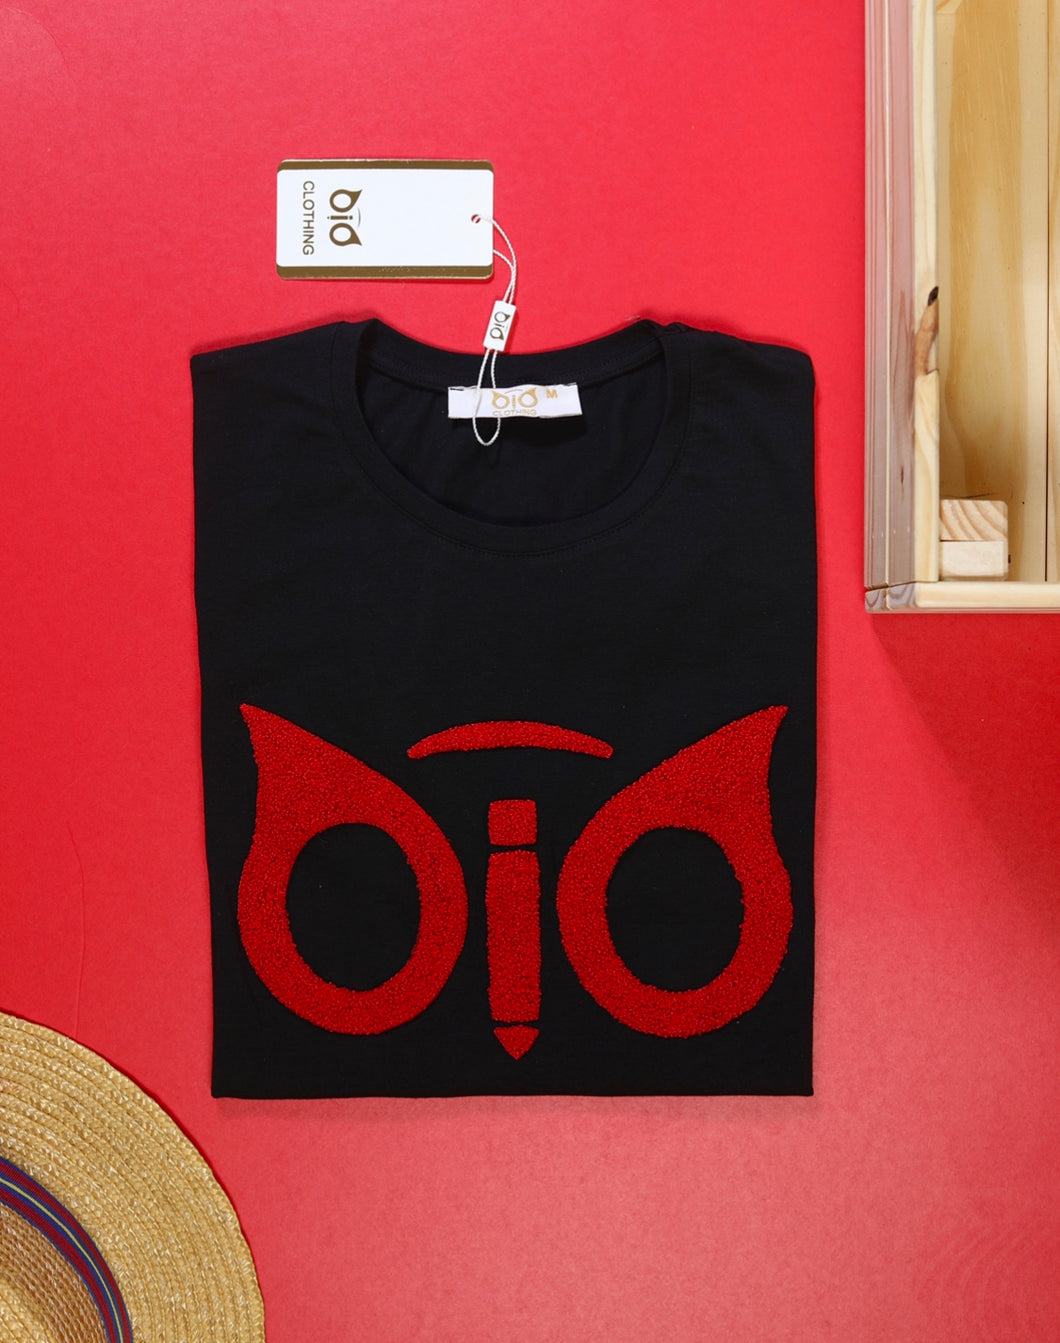 T-Shirt OiO SE Plush Cloth Black & Red